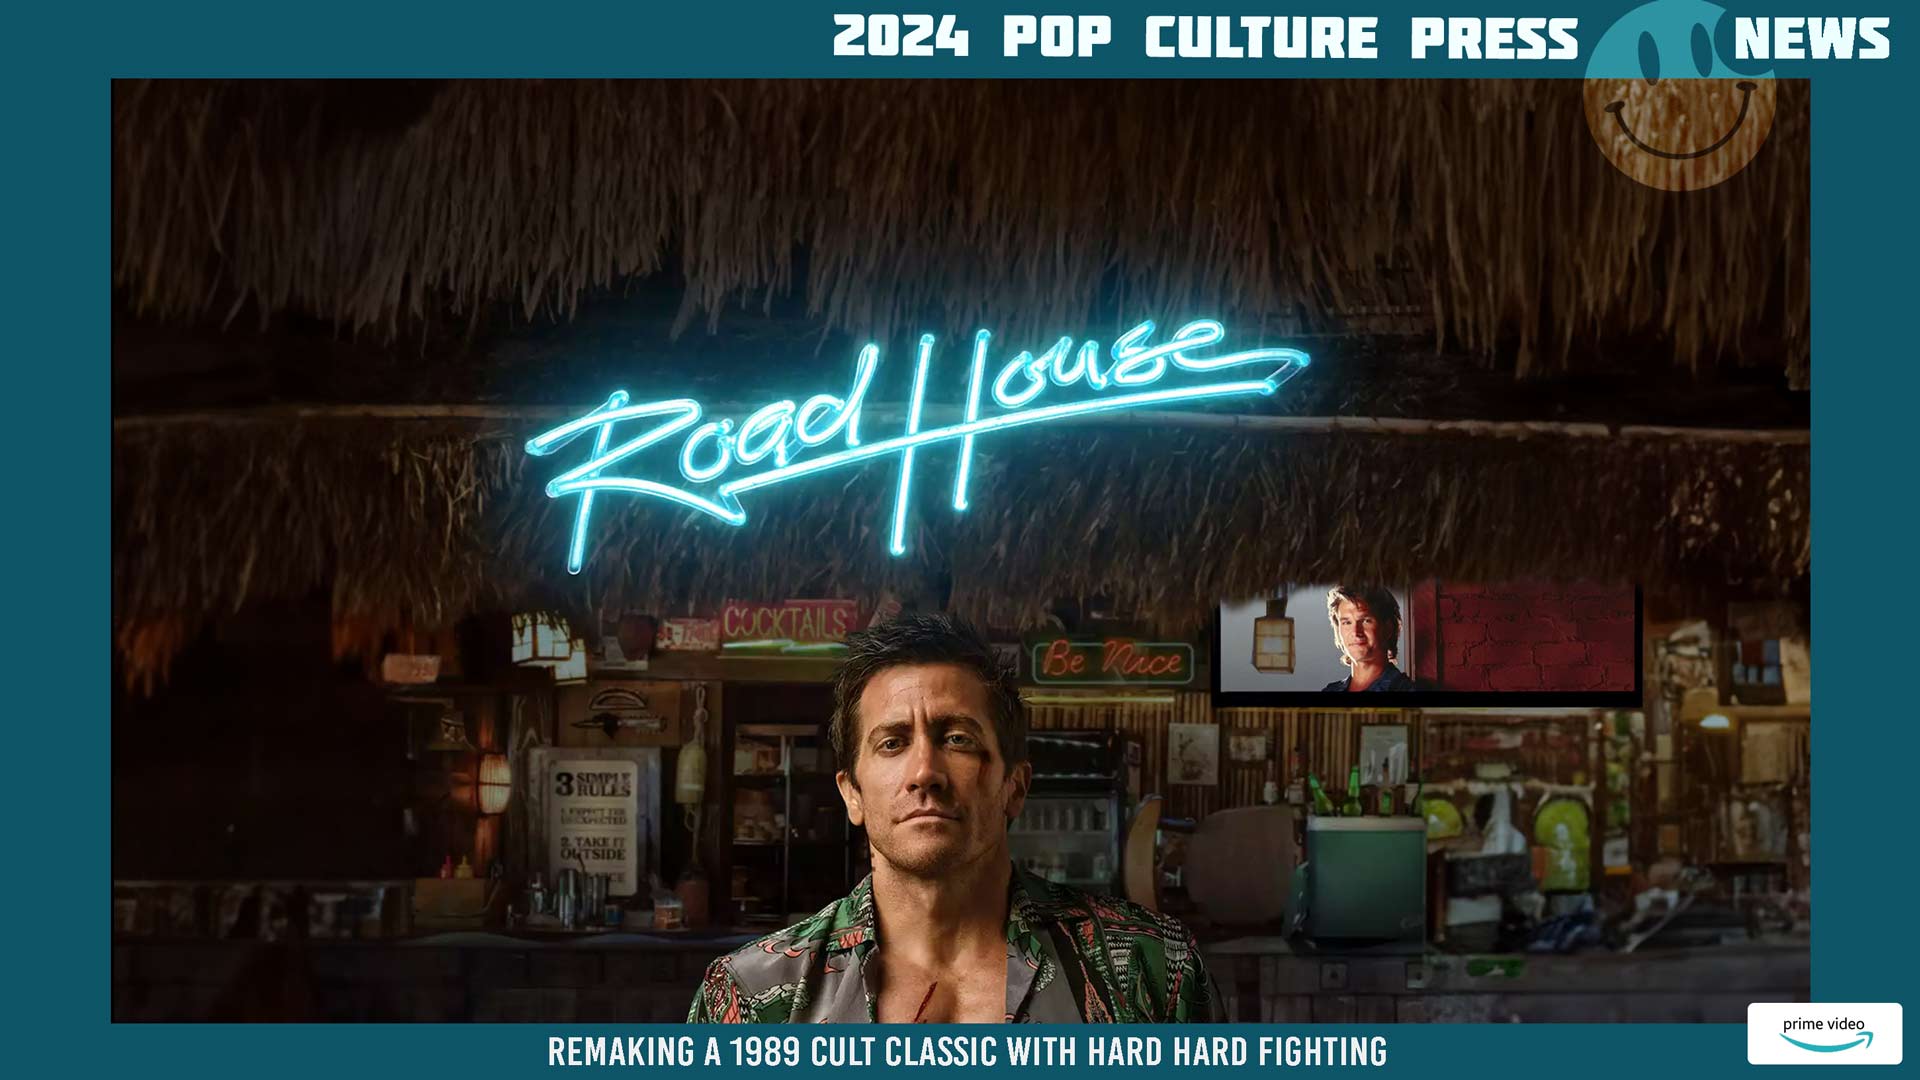 Jake Gyllenhaal as Dalton in Road House Remake on Prime Video